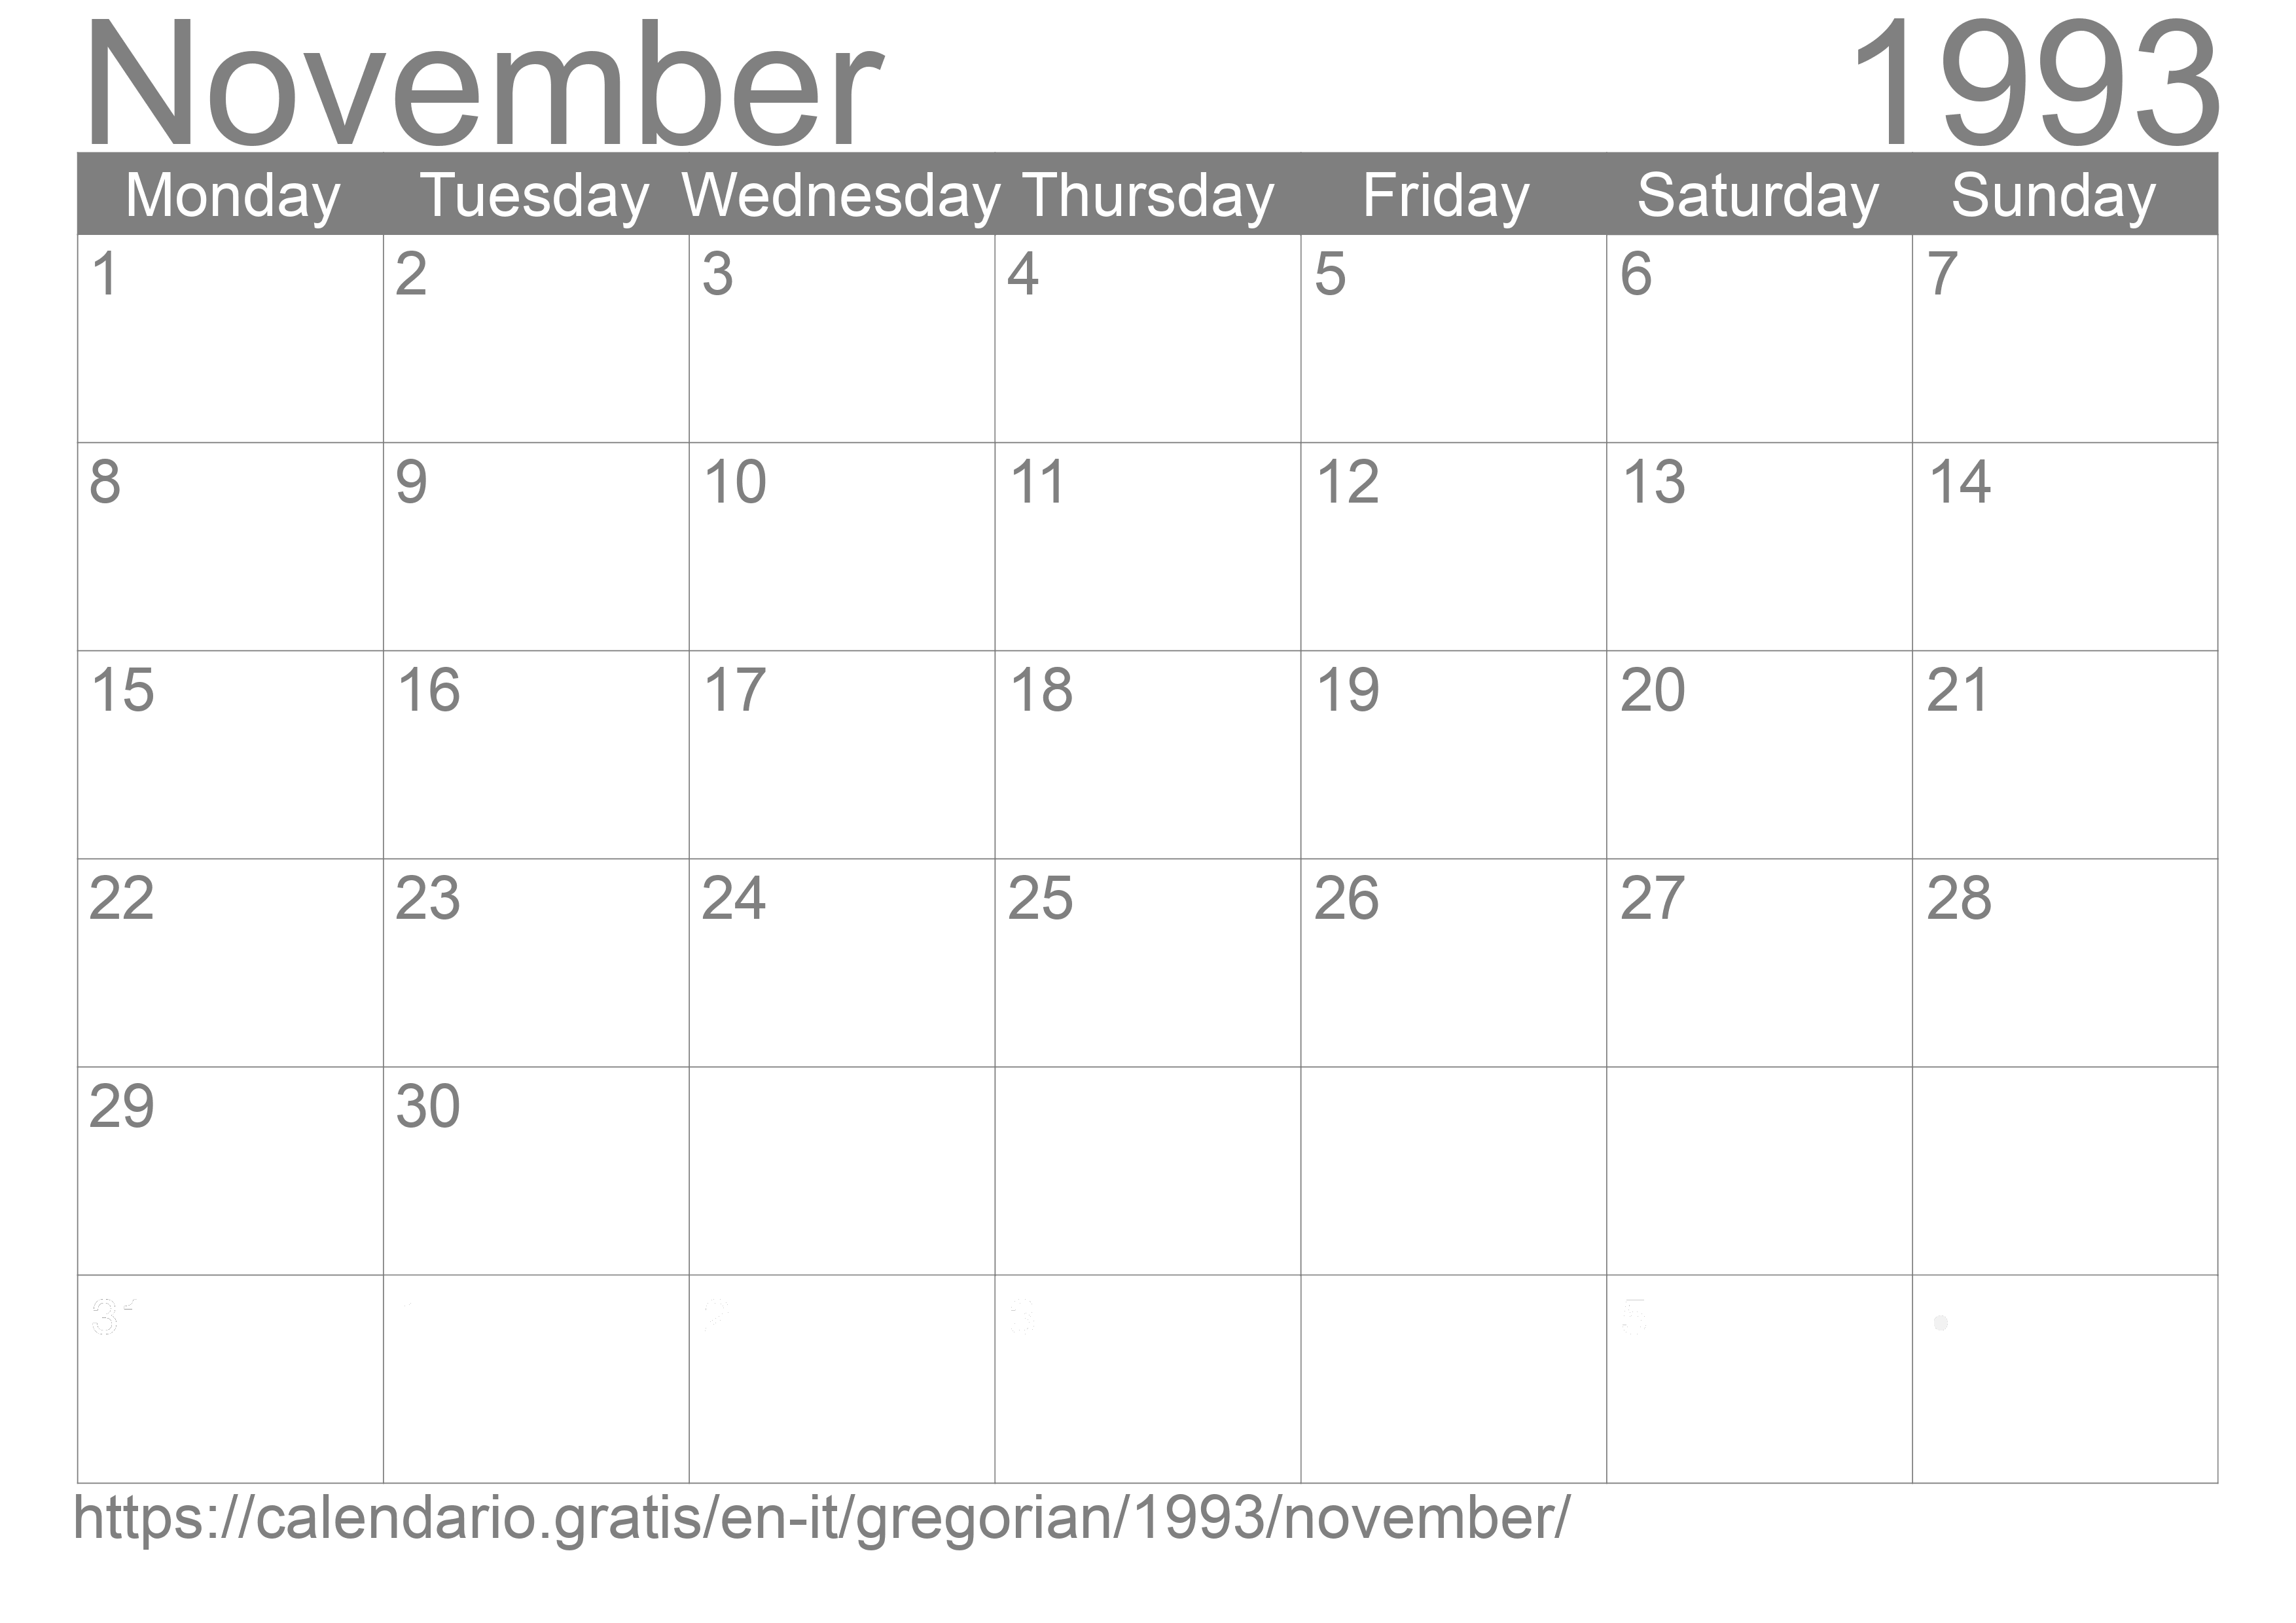 Calendar November 1993 to print